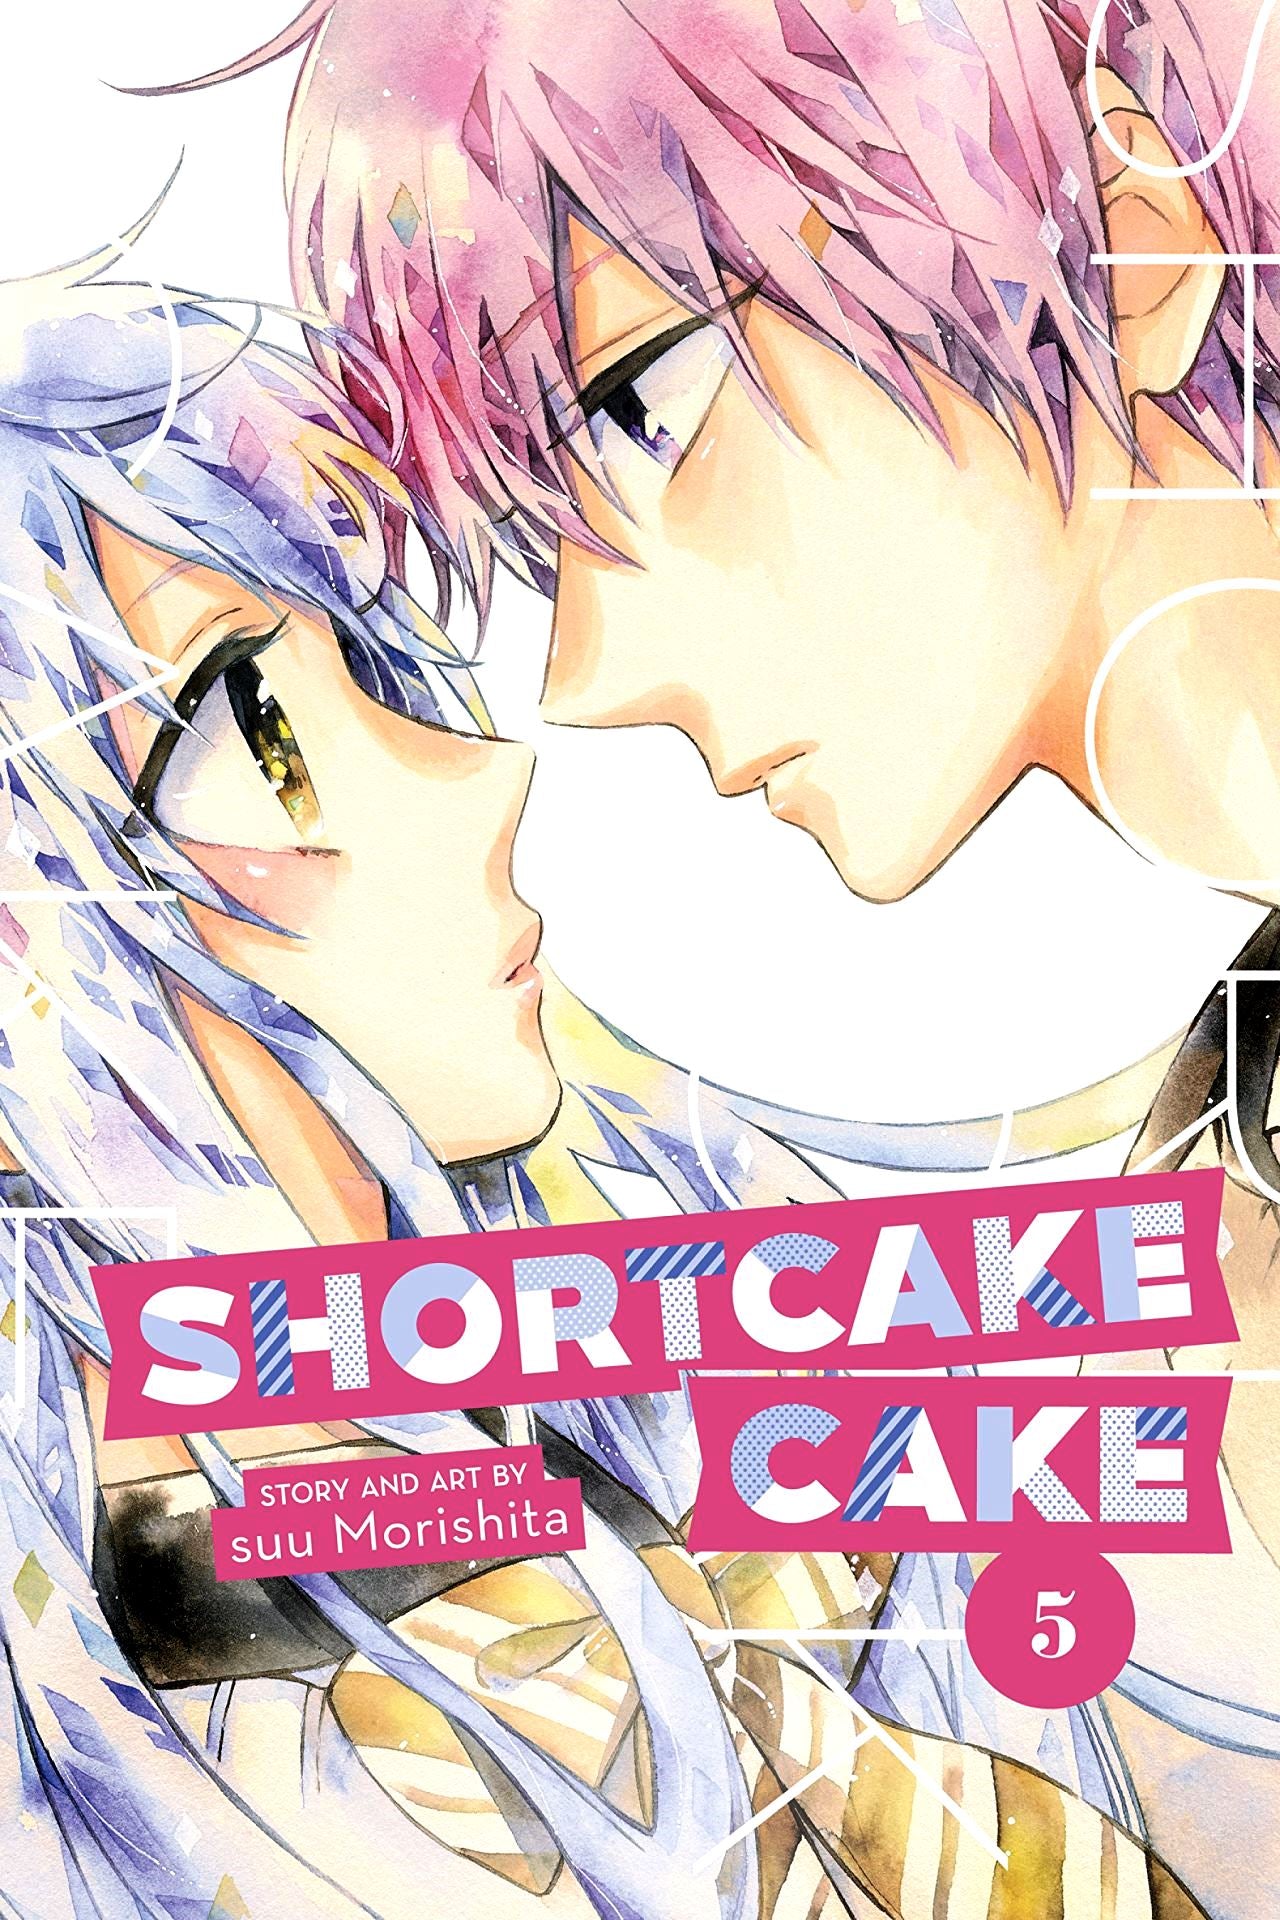 Shortcake Cake Volume 05